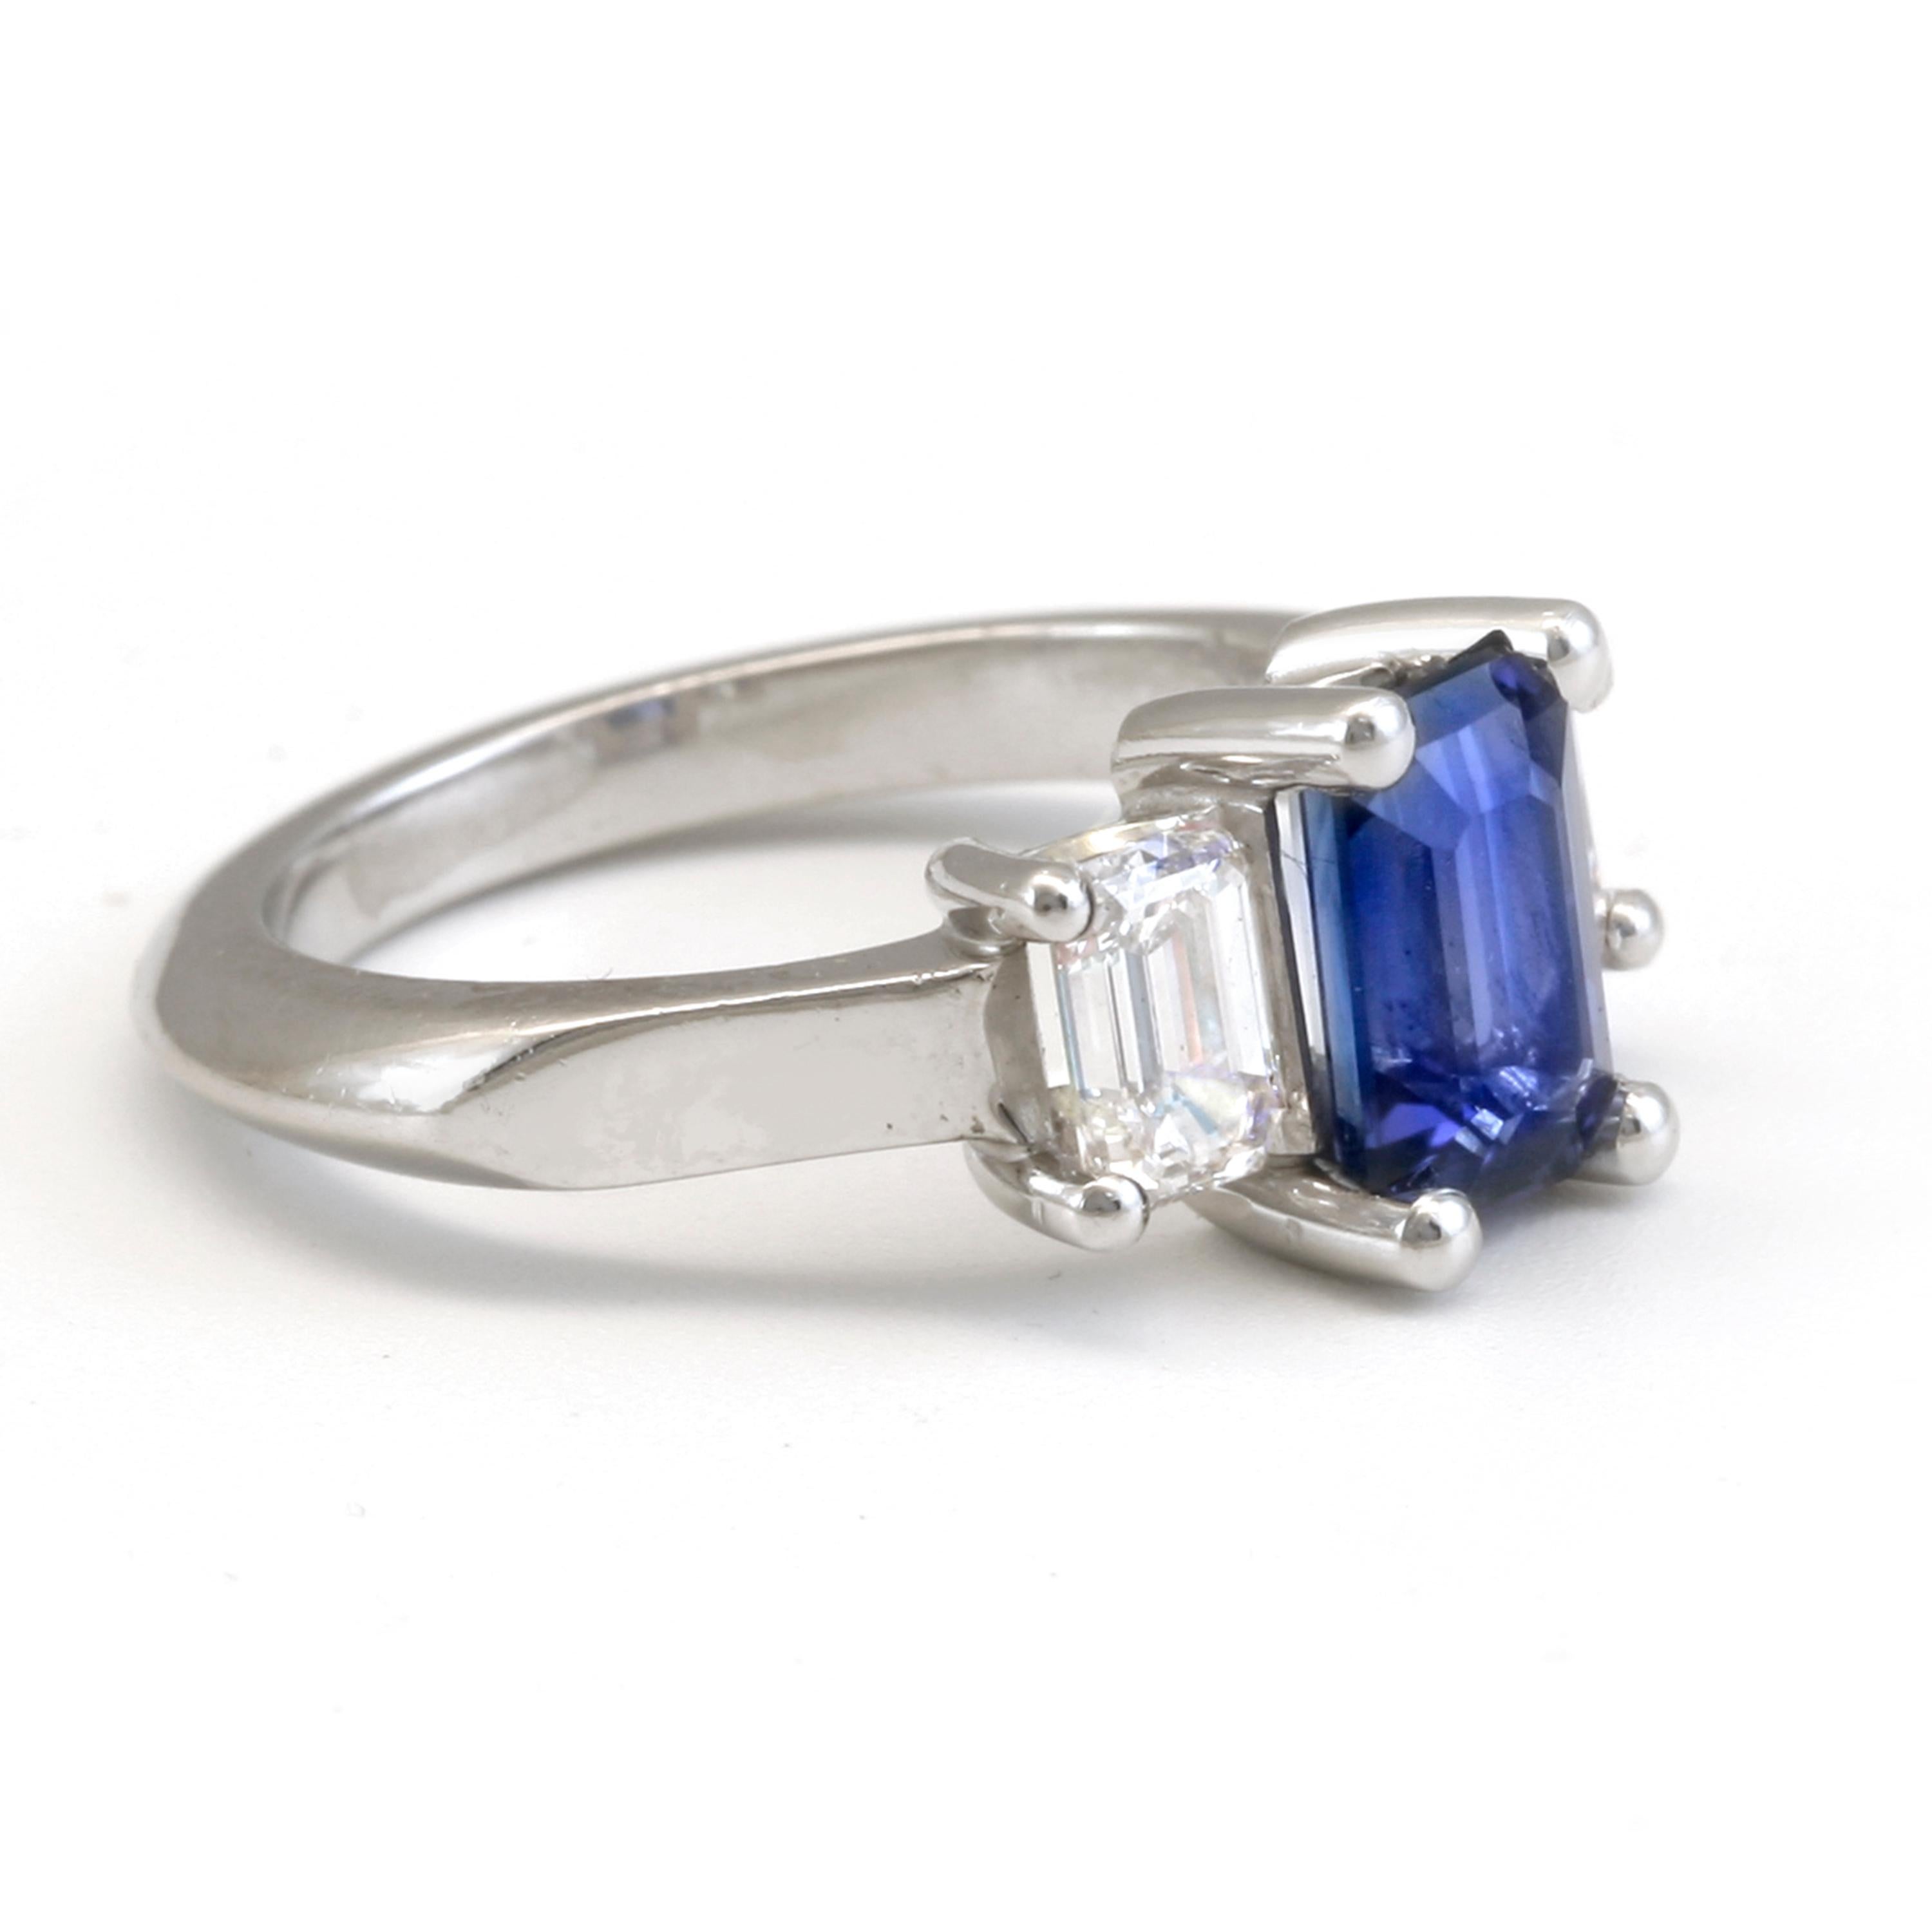 Artisan Diana Kim England Emerald Cut Ceylon Blue Sapphire and Diamond Ring in Platinum For Sale